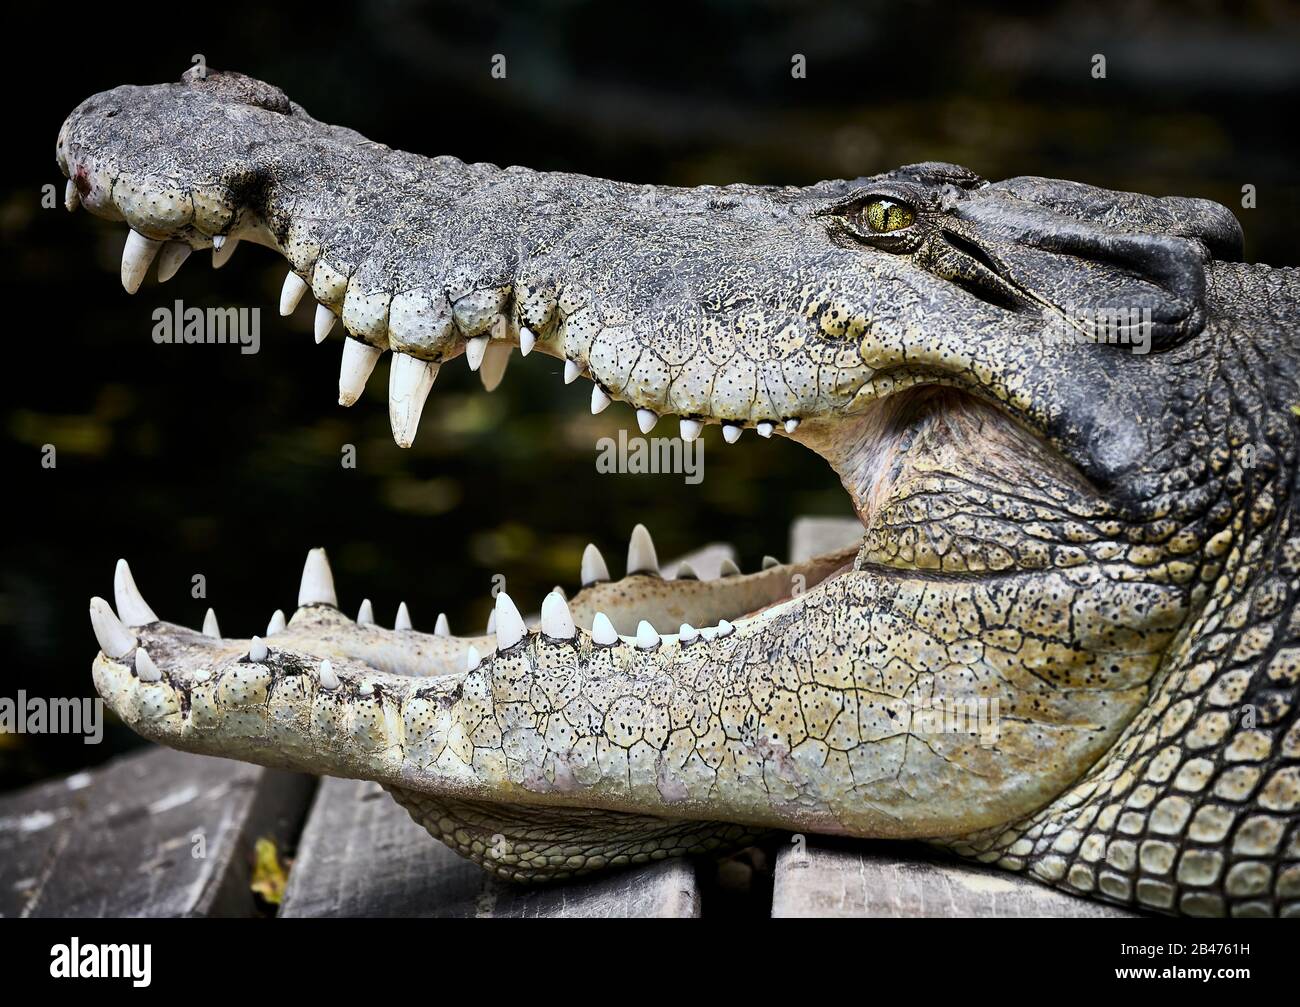 Australian Saltwater Crocodile - Crocodylus porosus, jaws open and alert, classic pose of this apex predator Stock Photo